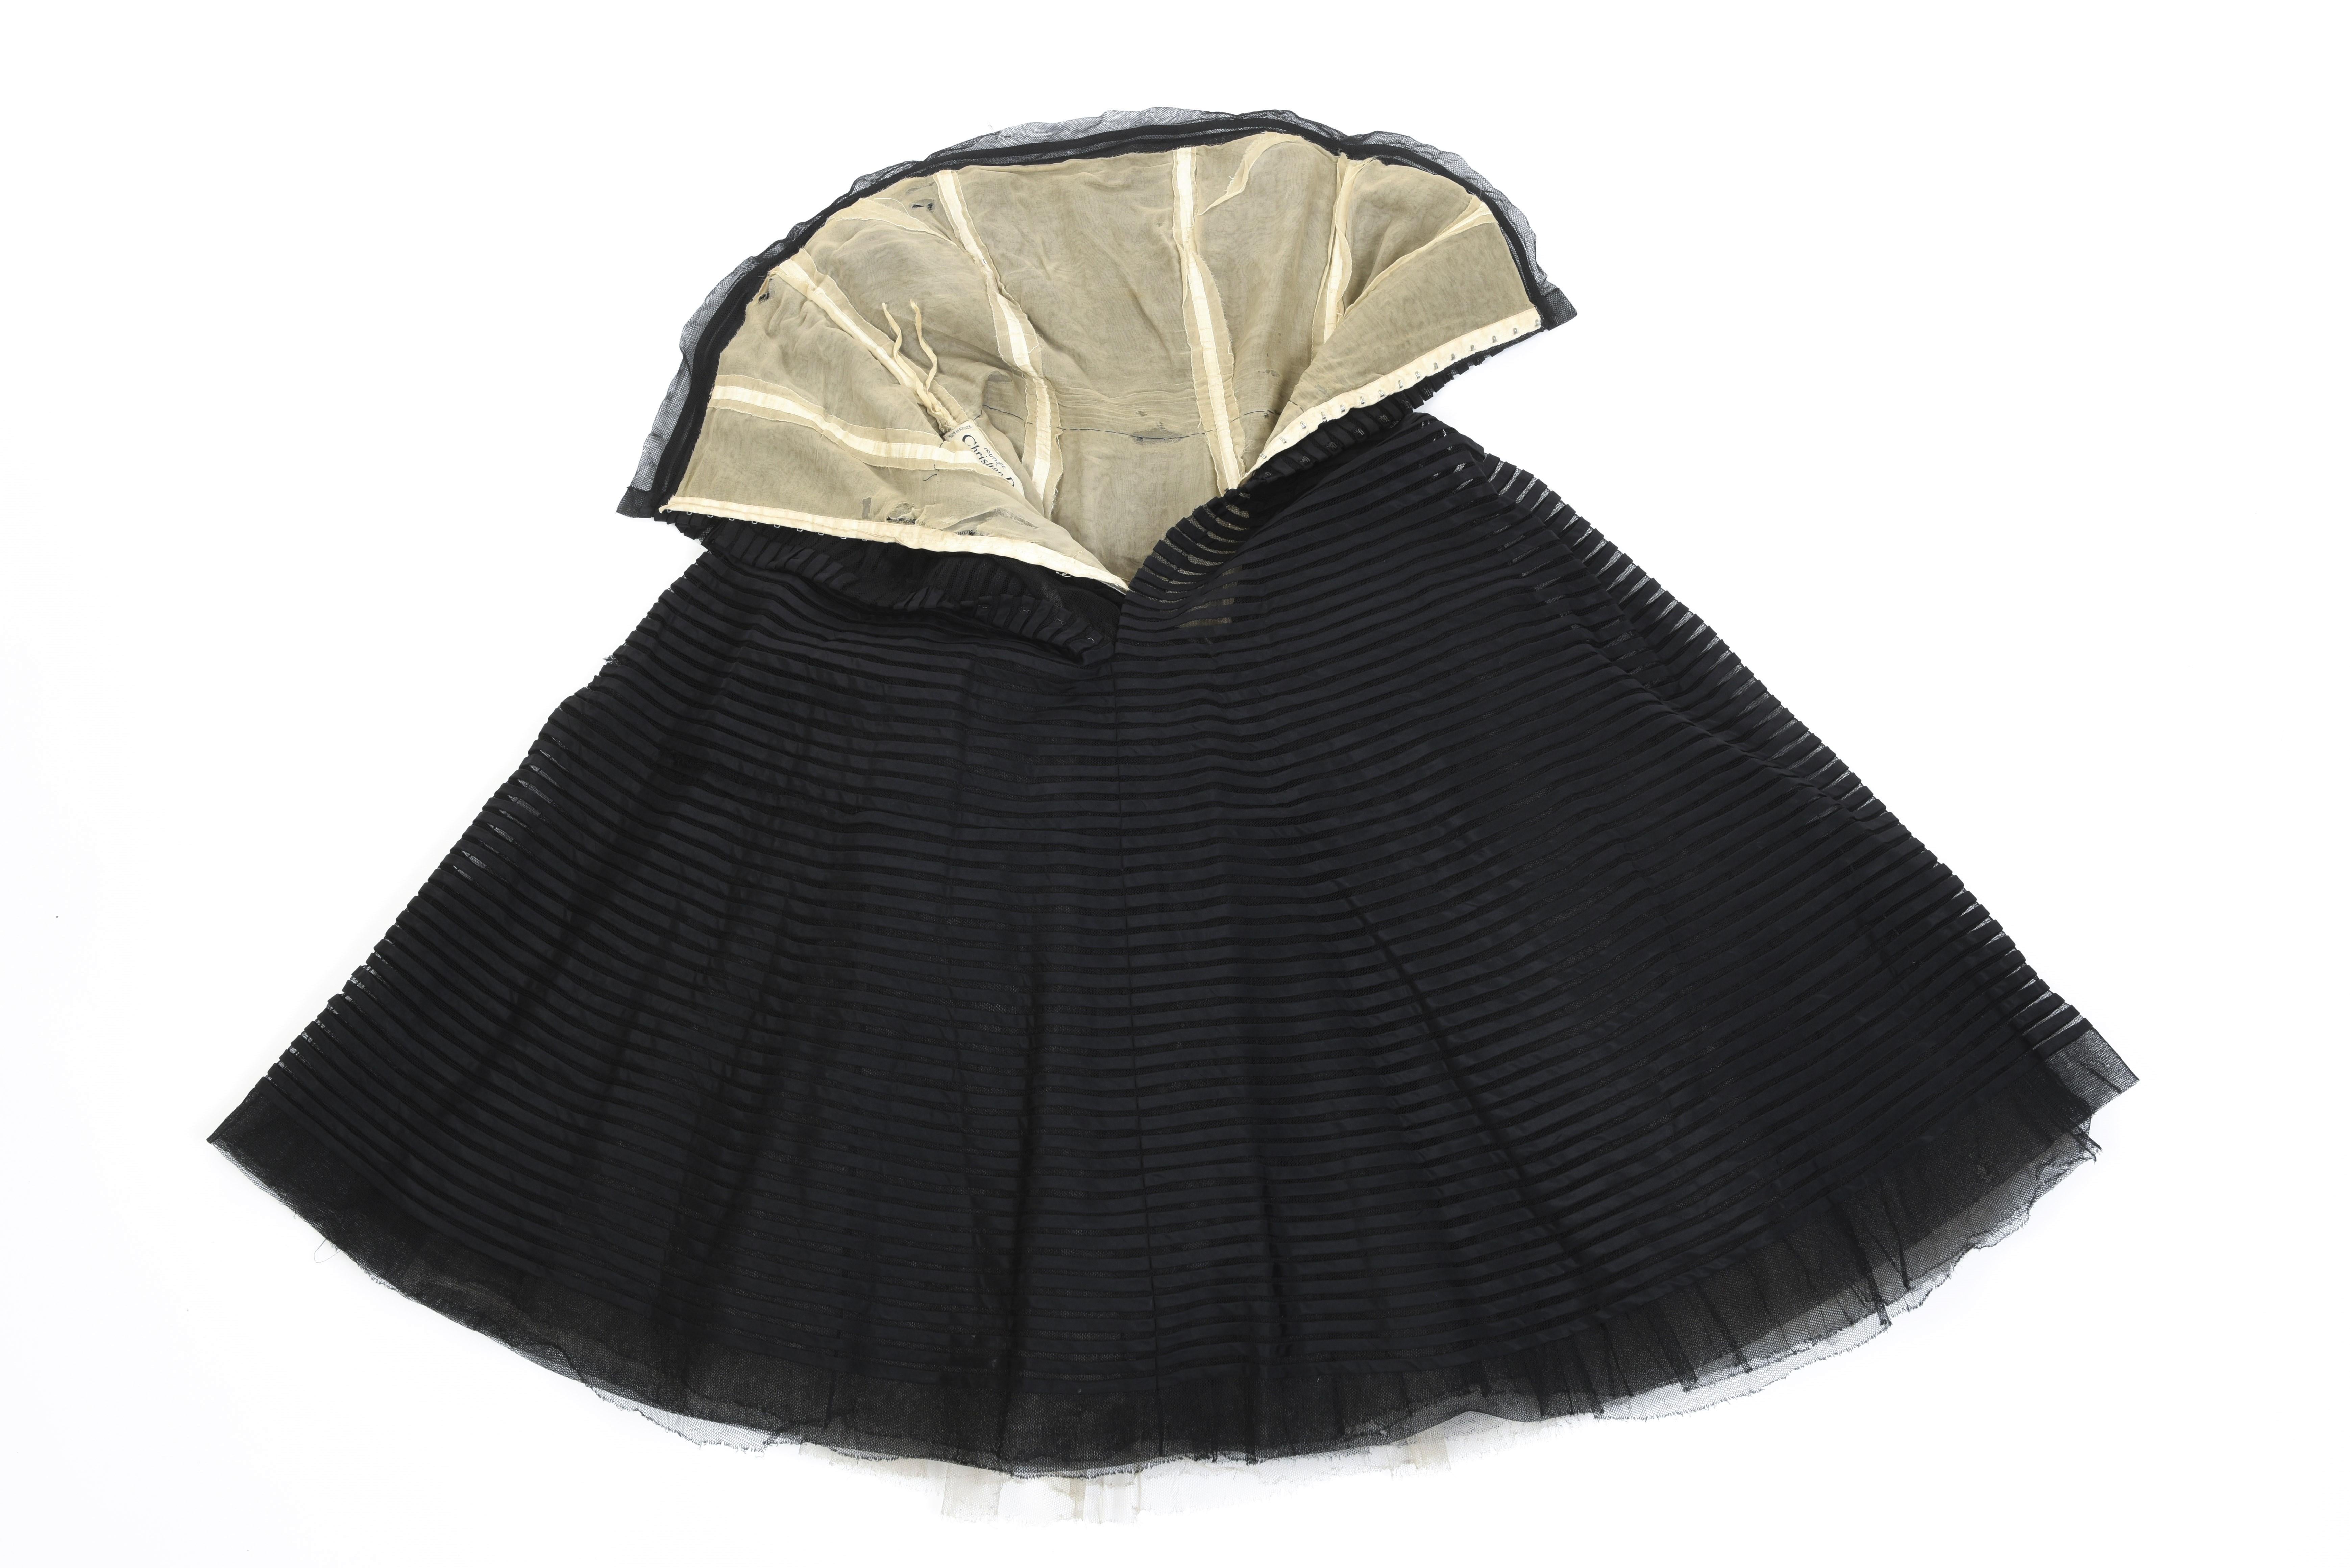 Christian Dior Ball Gown in black tulle & satin appliqué N° 363404 Circa 1955 7